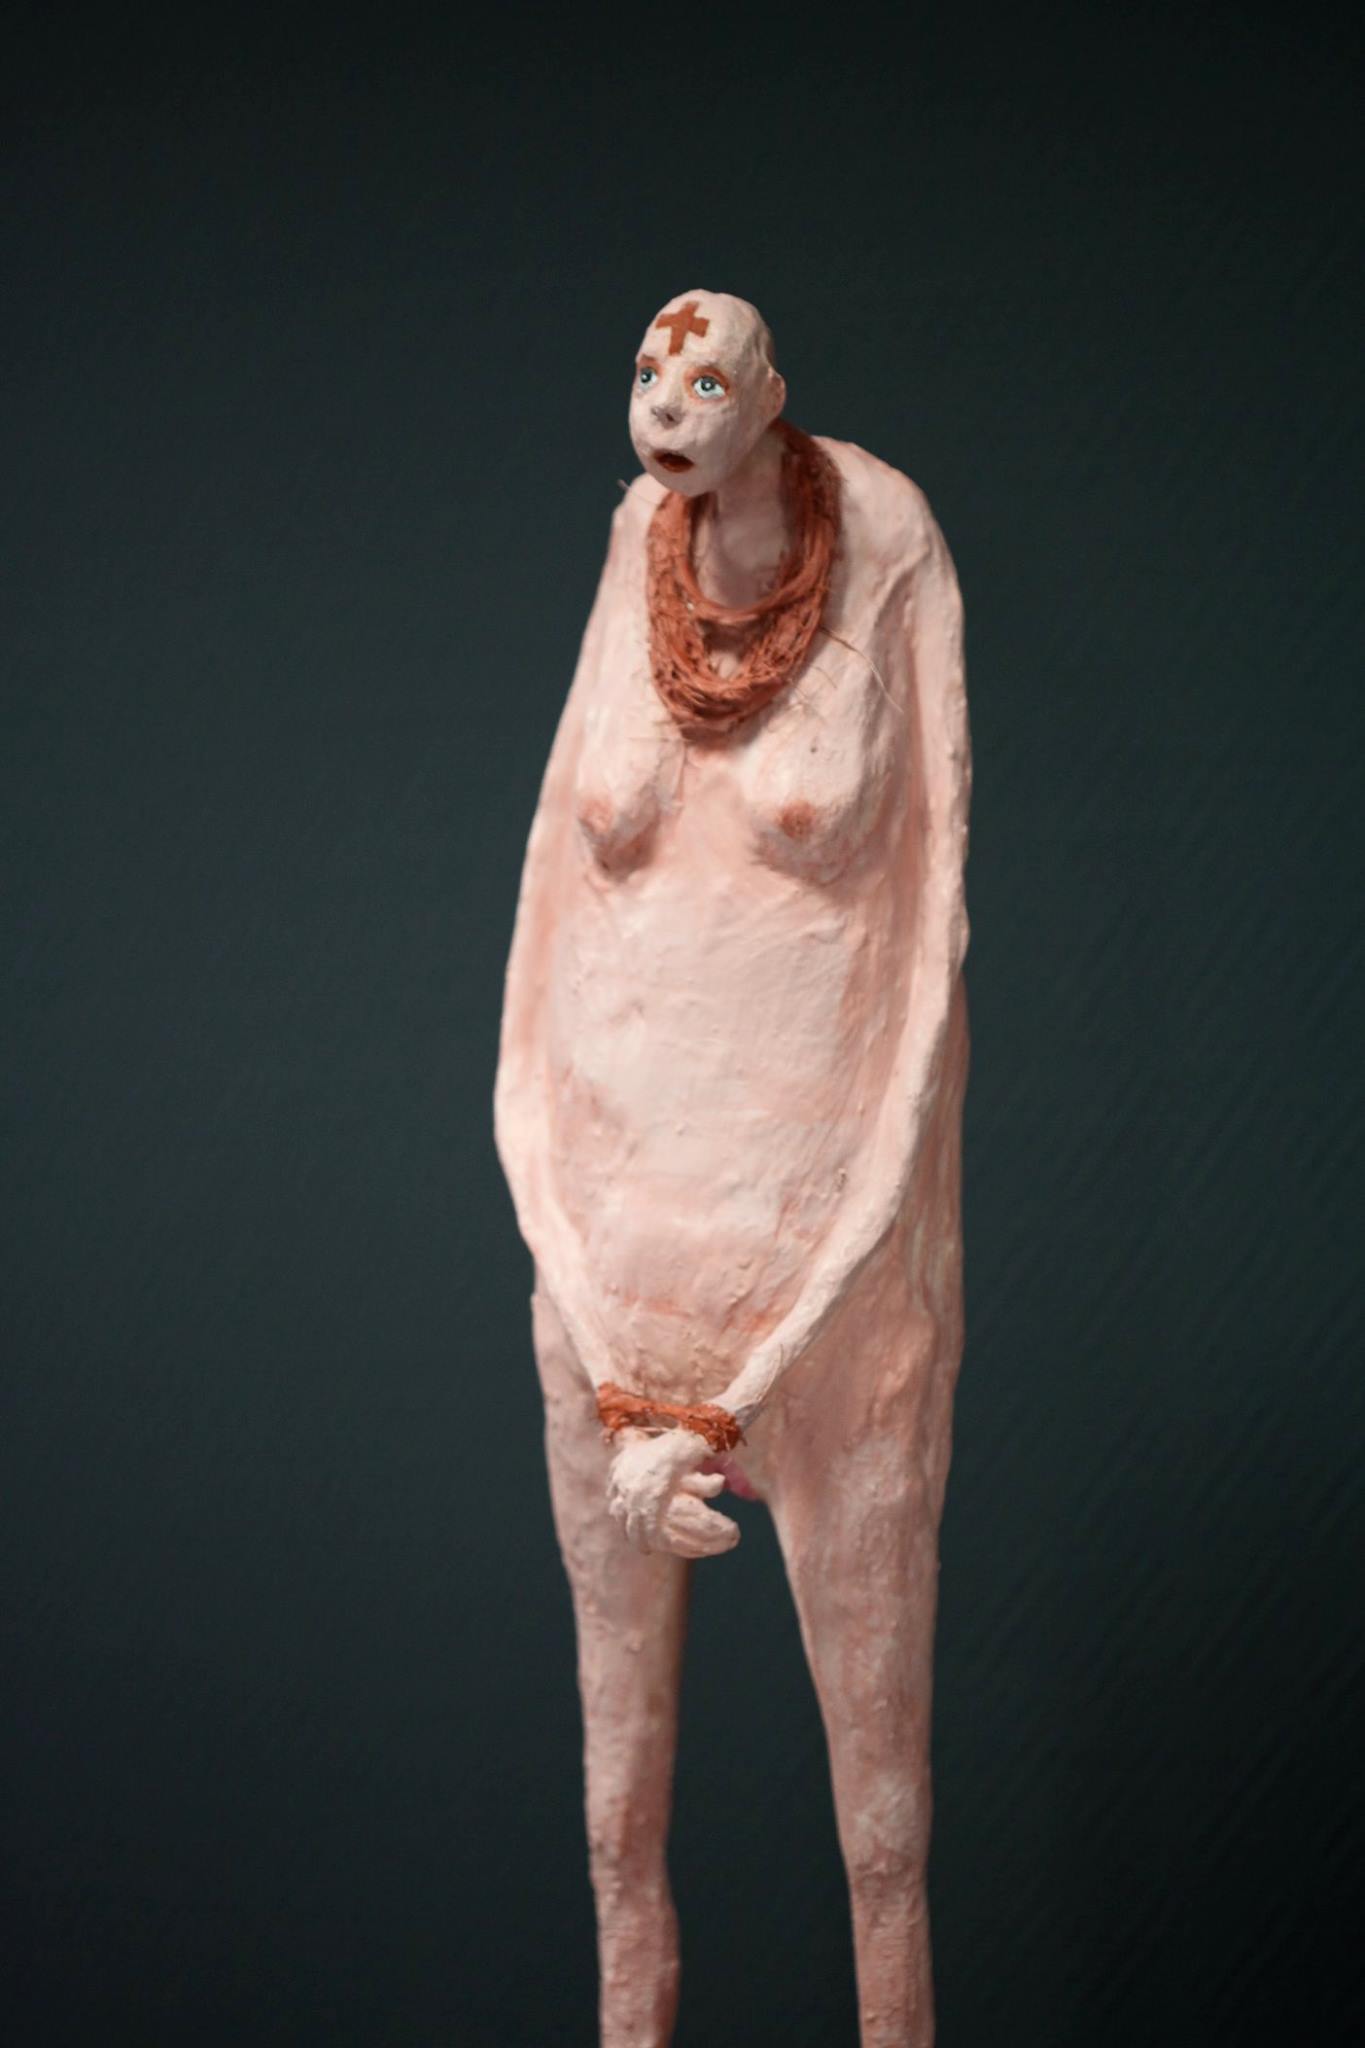 sandrine brillaud – sculptures figuratives emotionnelles